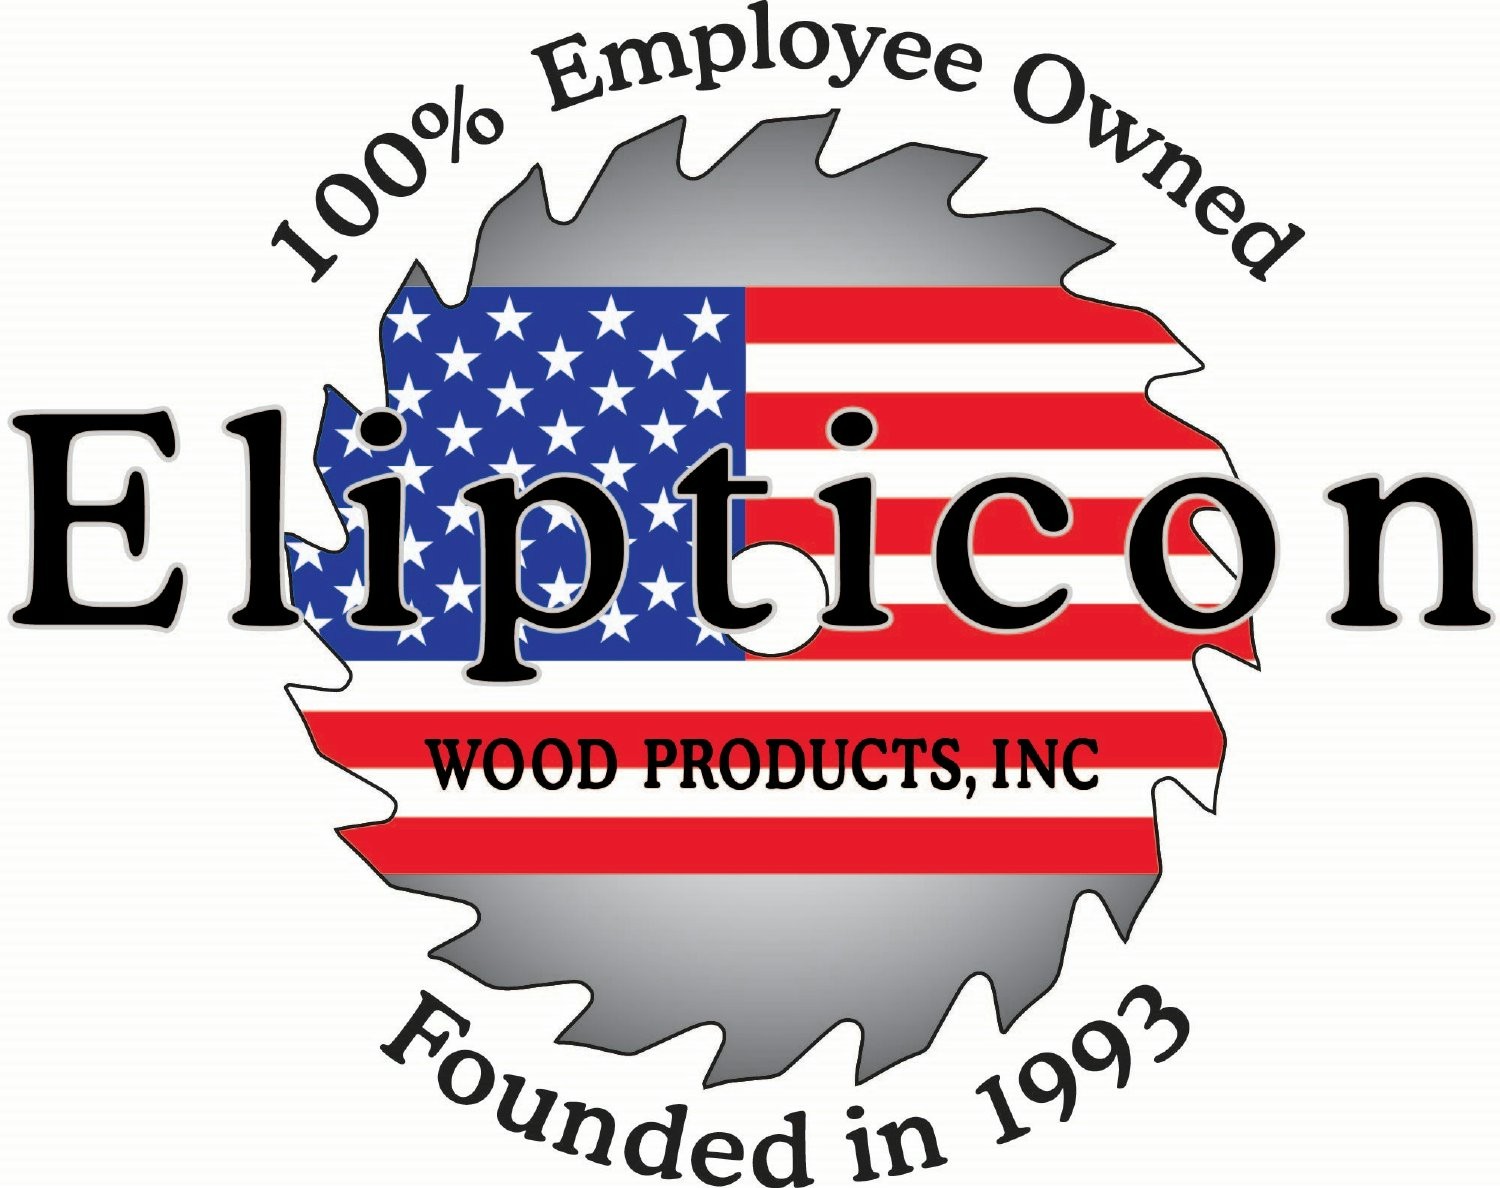 Elipticon Wood Products, Inc.